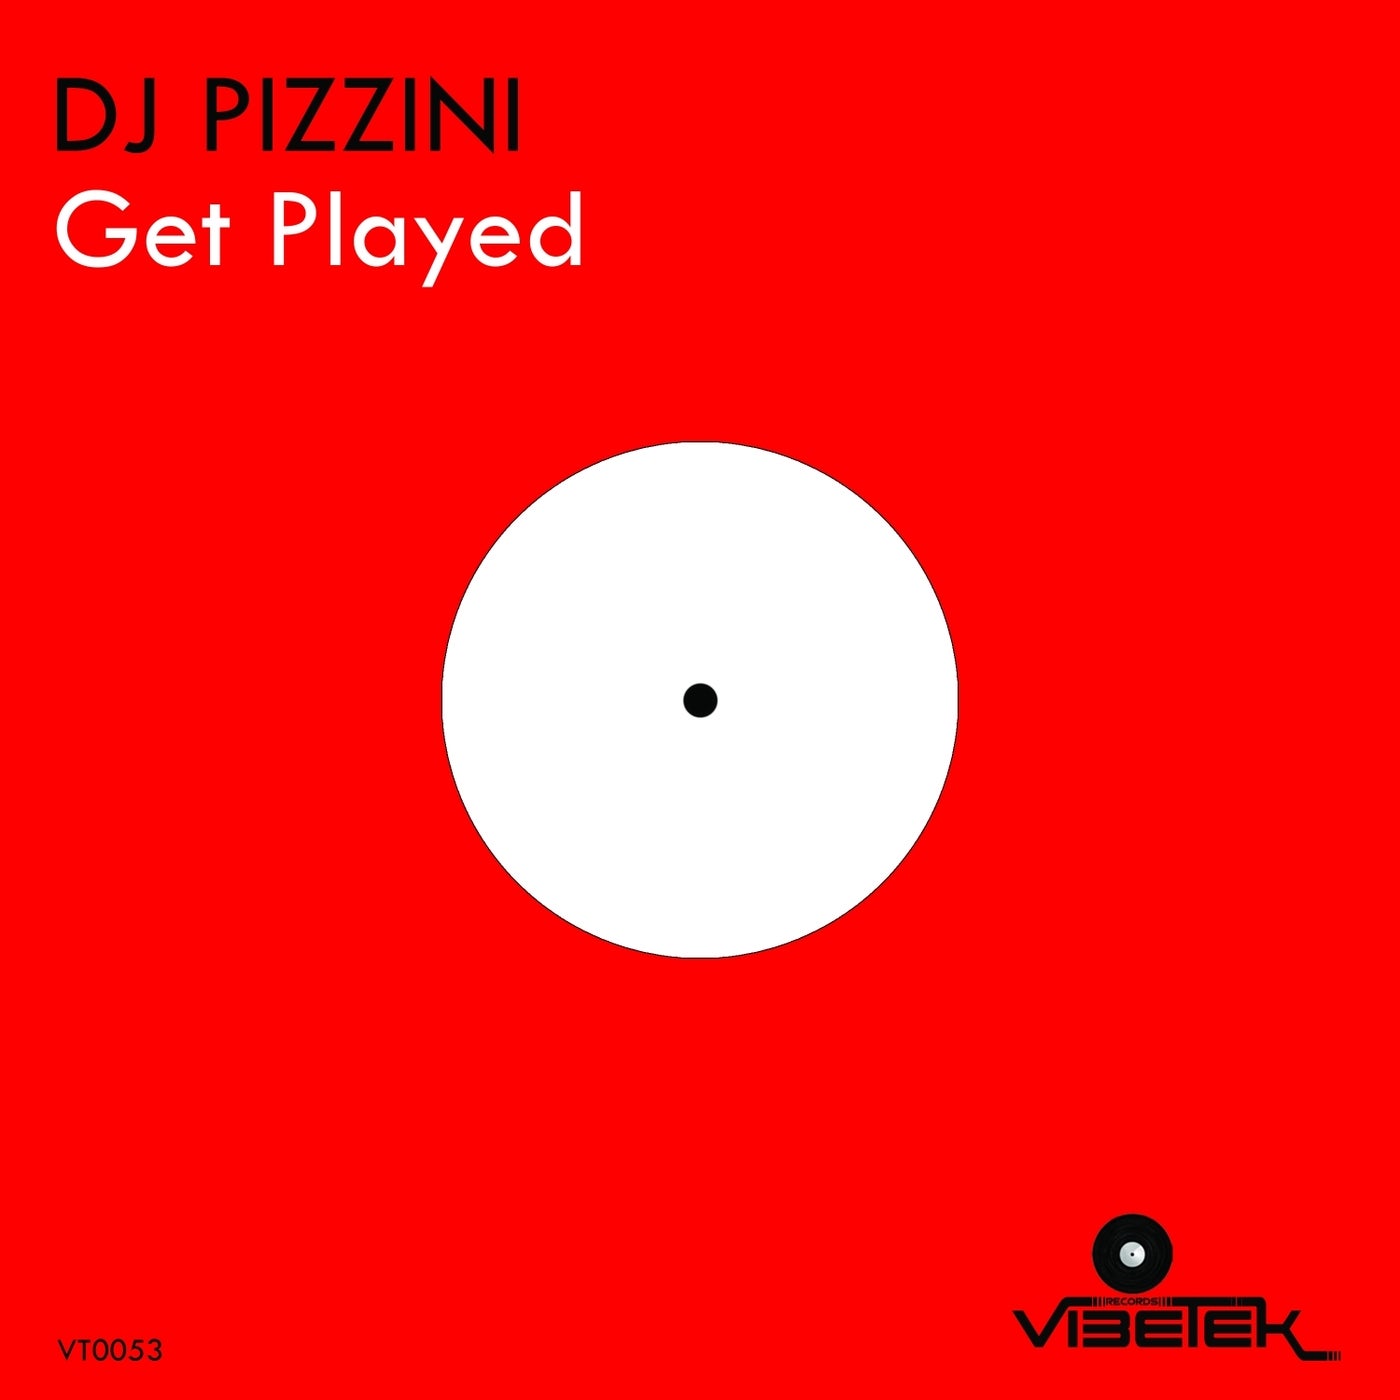 DJ PIZZINI - Get Played - [Vibetek Records]